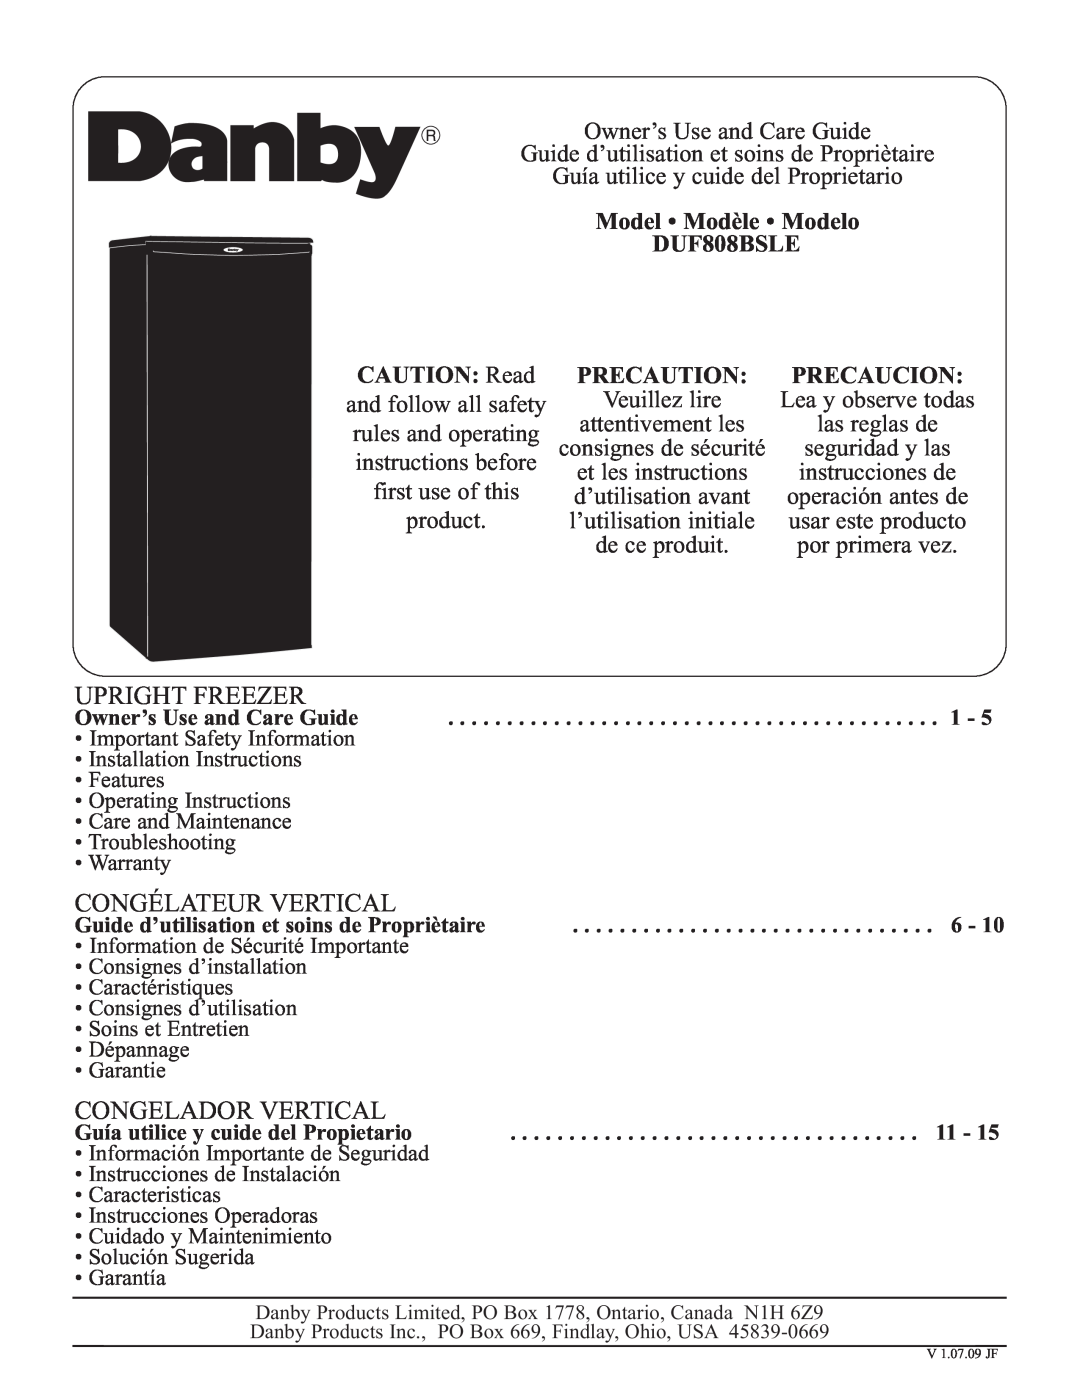 Danby installation instructions Model Modèle Modelo DUF808BSLE, CAUTION Read, Precaution, Precaucion, Upright Freezer 